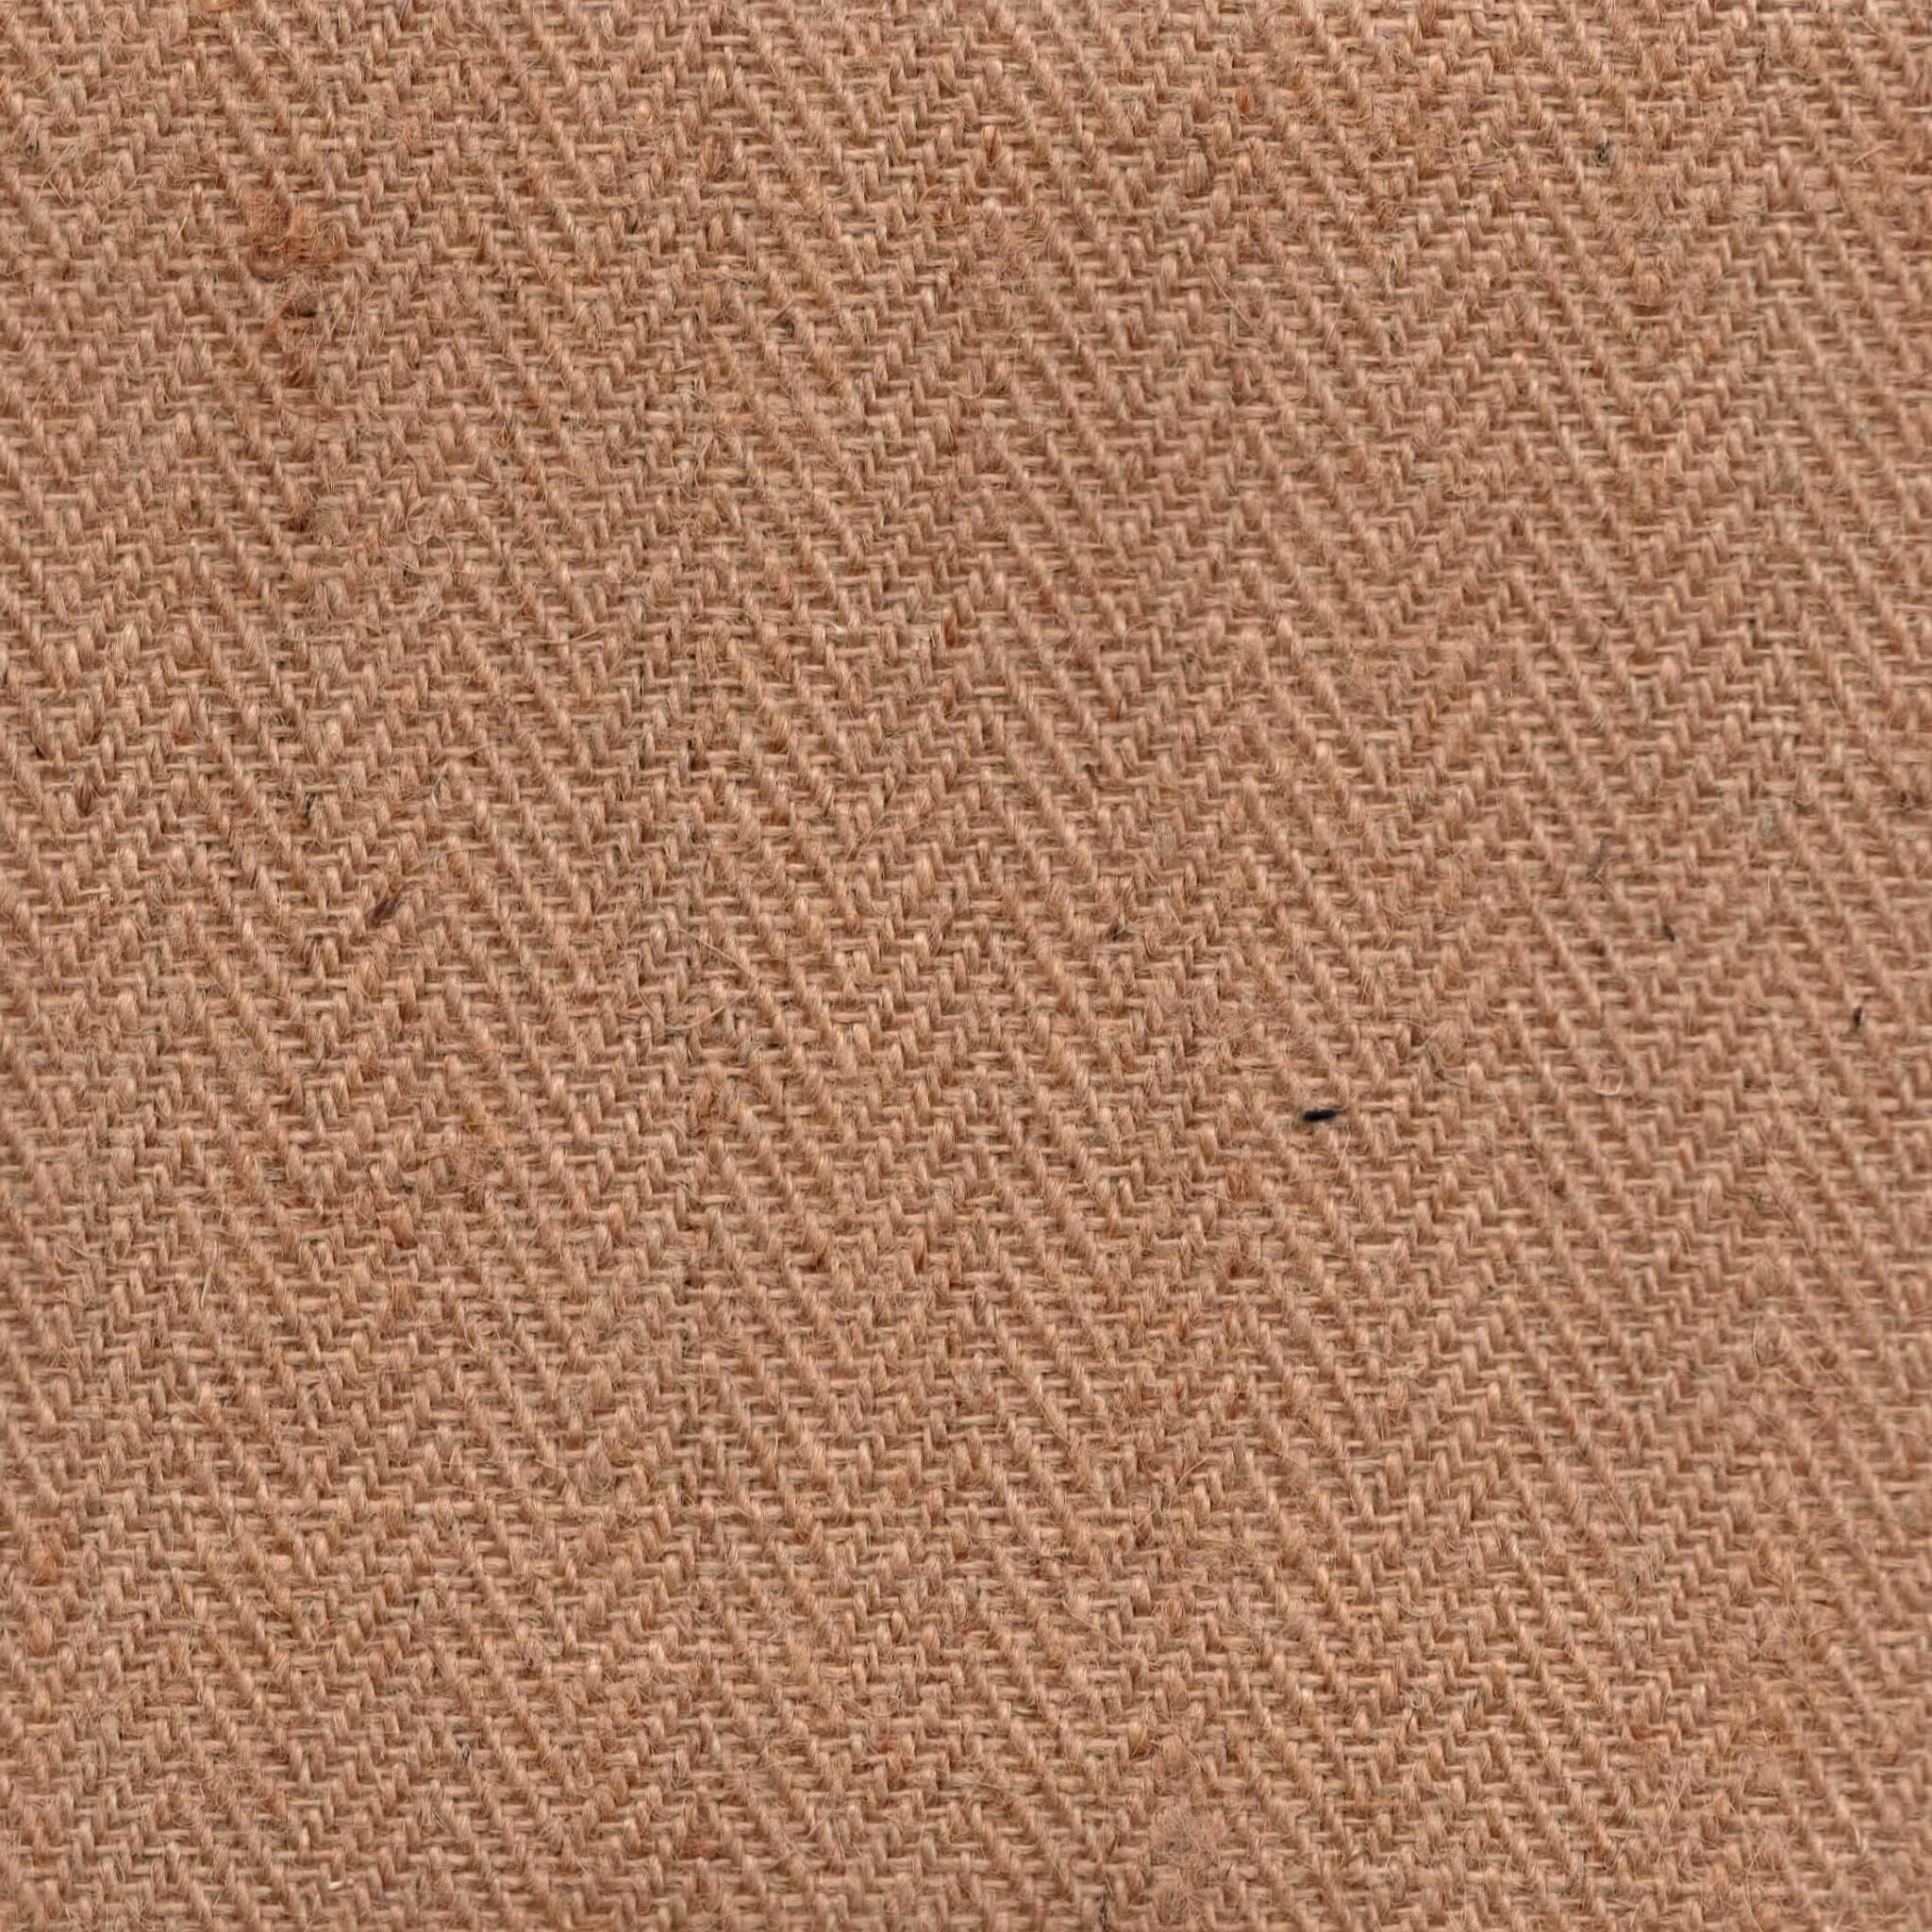 Hessian Herringbone Weave 100% Jute fabric in Natural